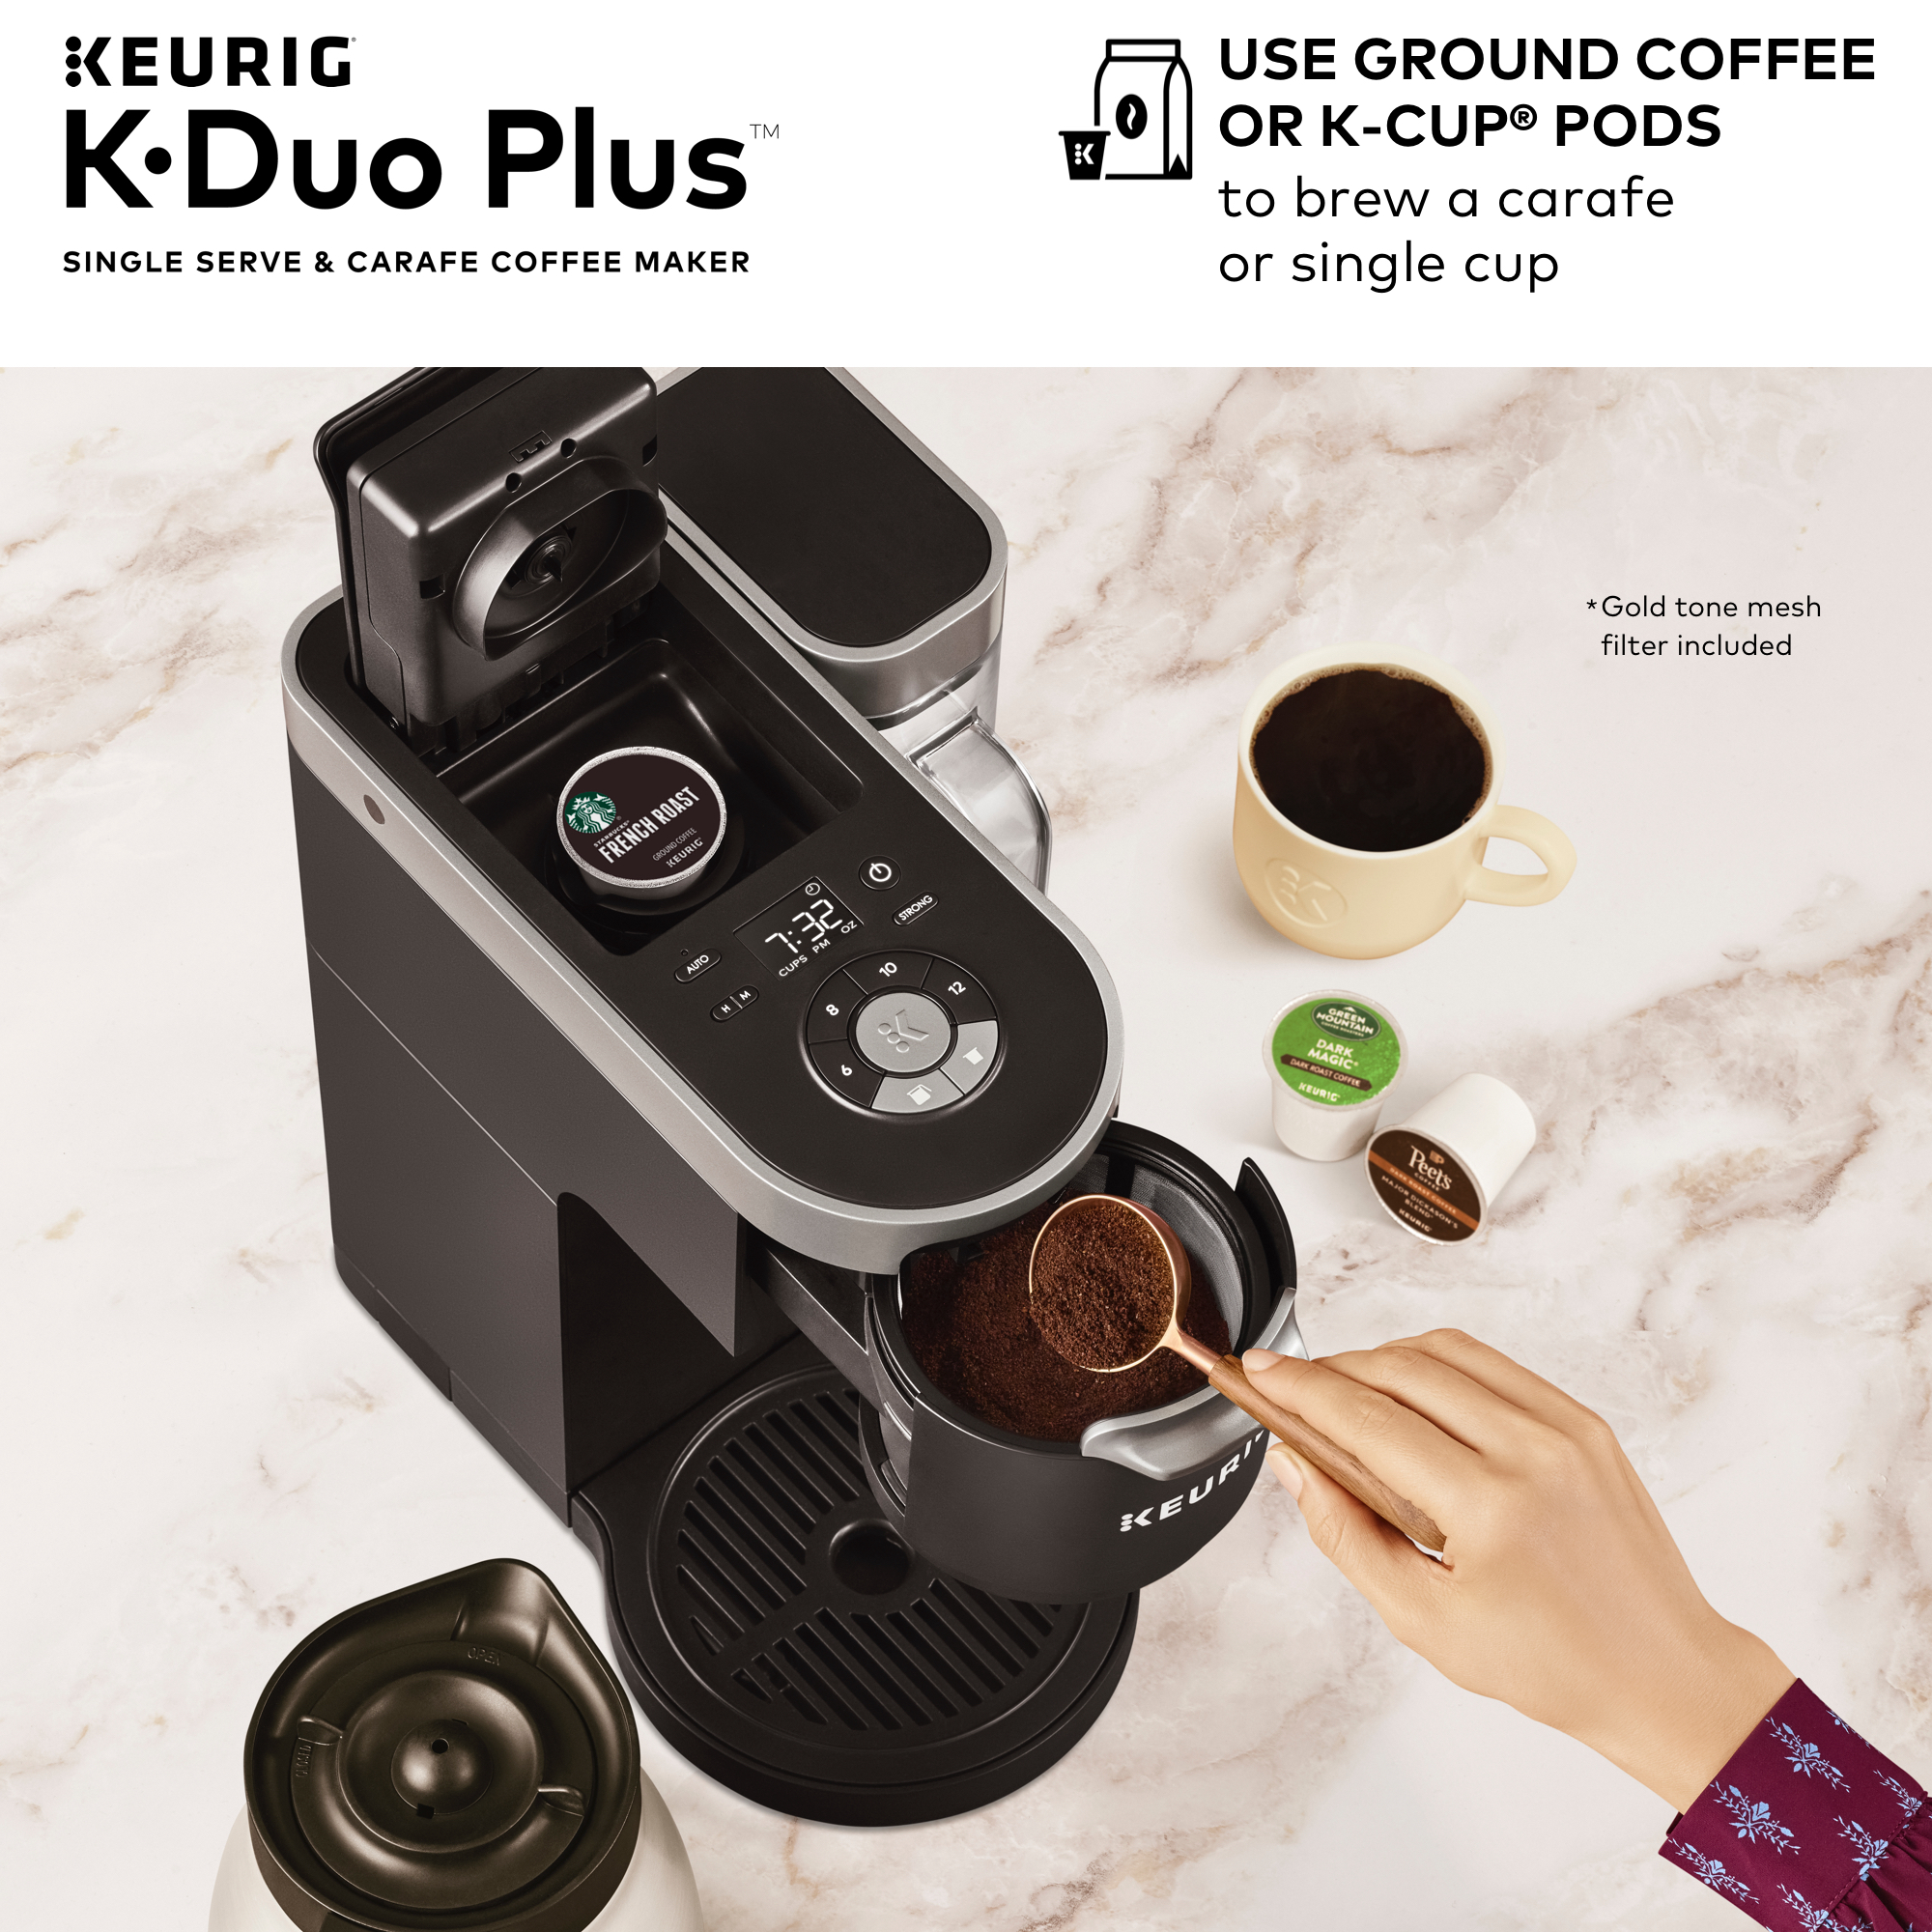 Keurig K-Duo Plus Single Serve & Carafe Coffee Maker - image 12 of 24